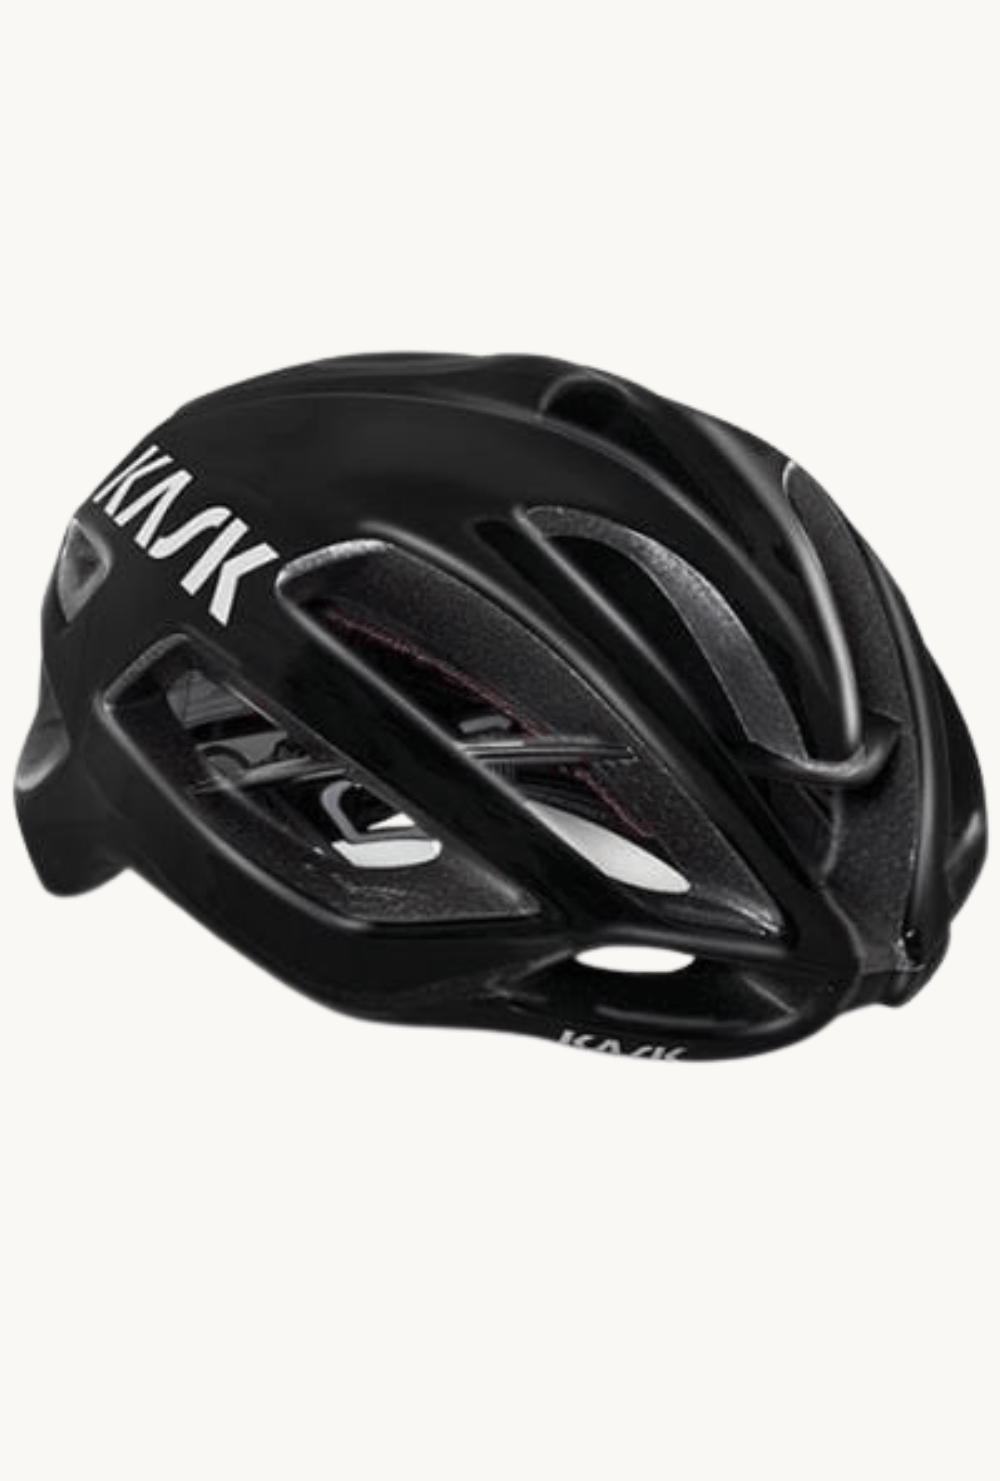 Helmet - Kask Protone Blacksmall (50-56cm) / Black